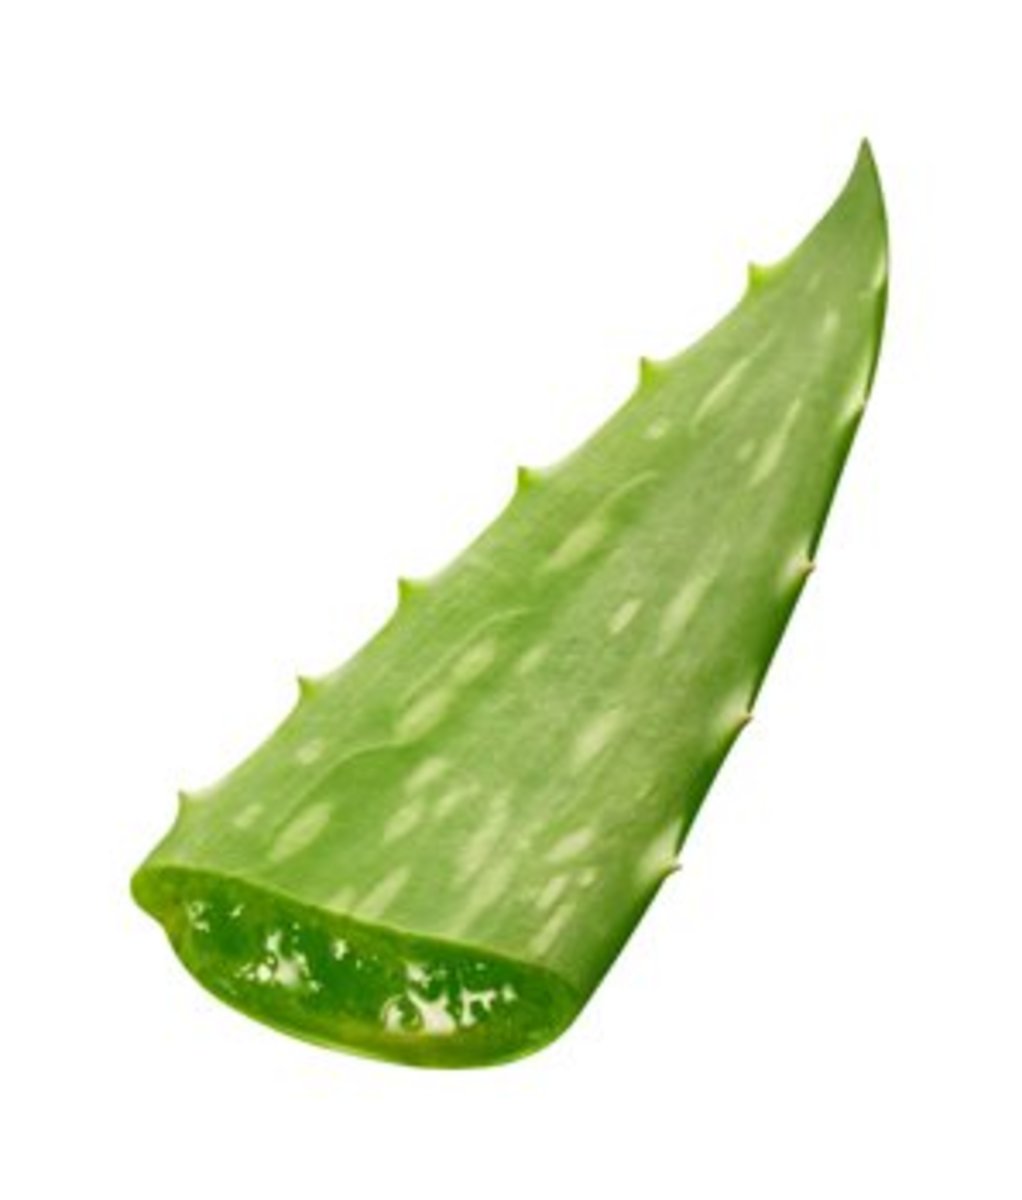 Aloe vera can help your skin regenerate damaged tissue. 